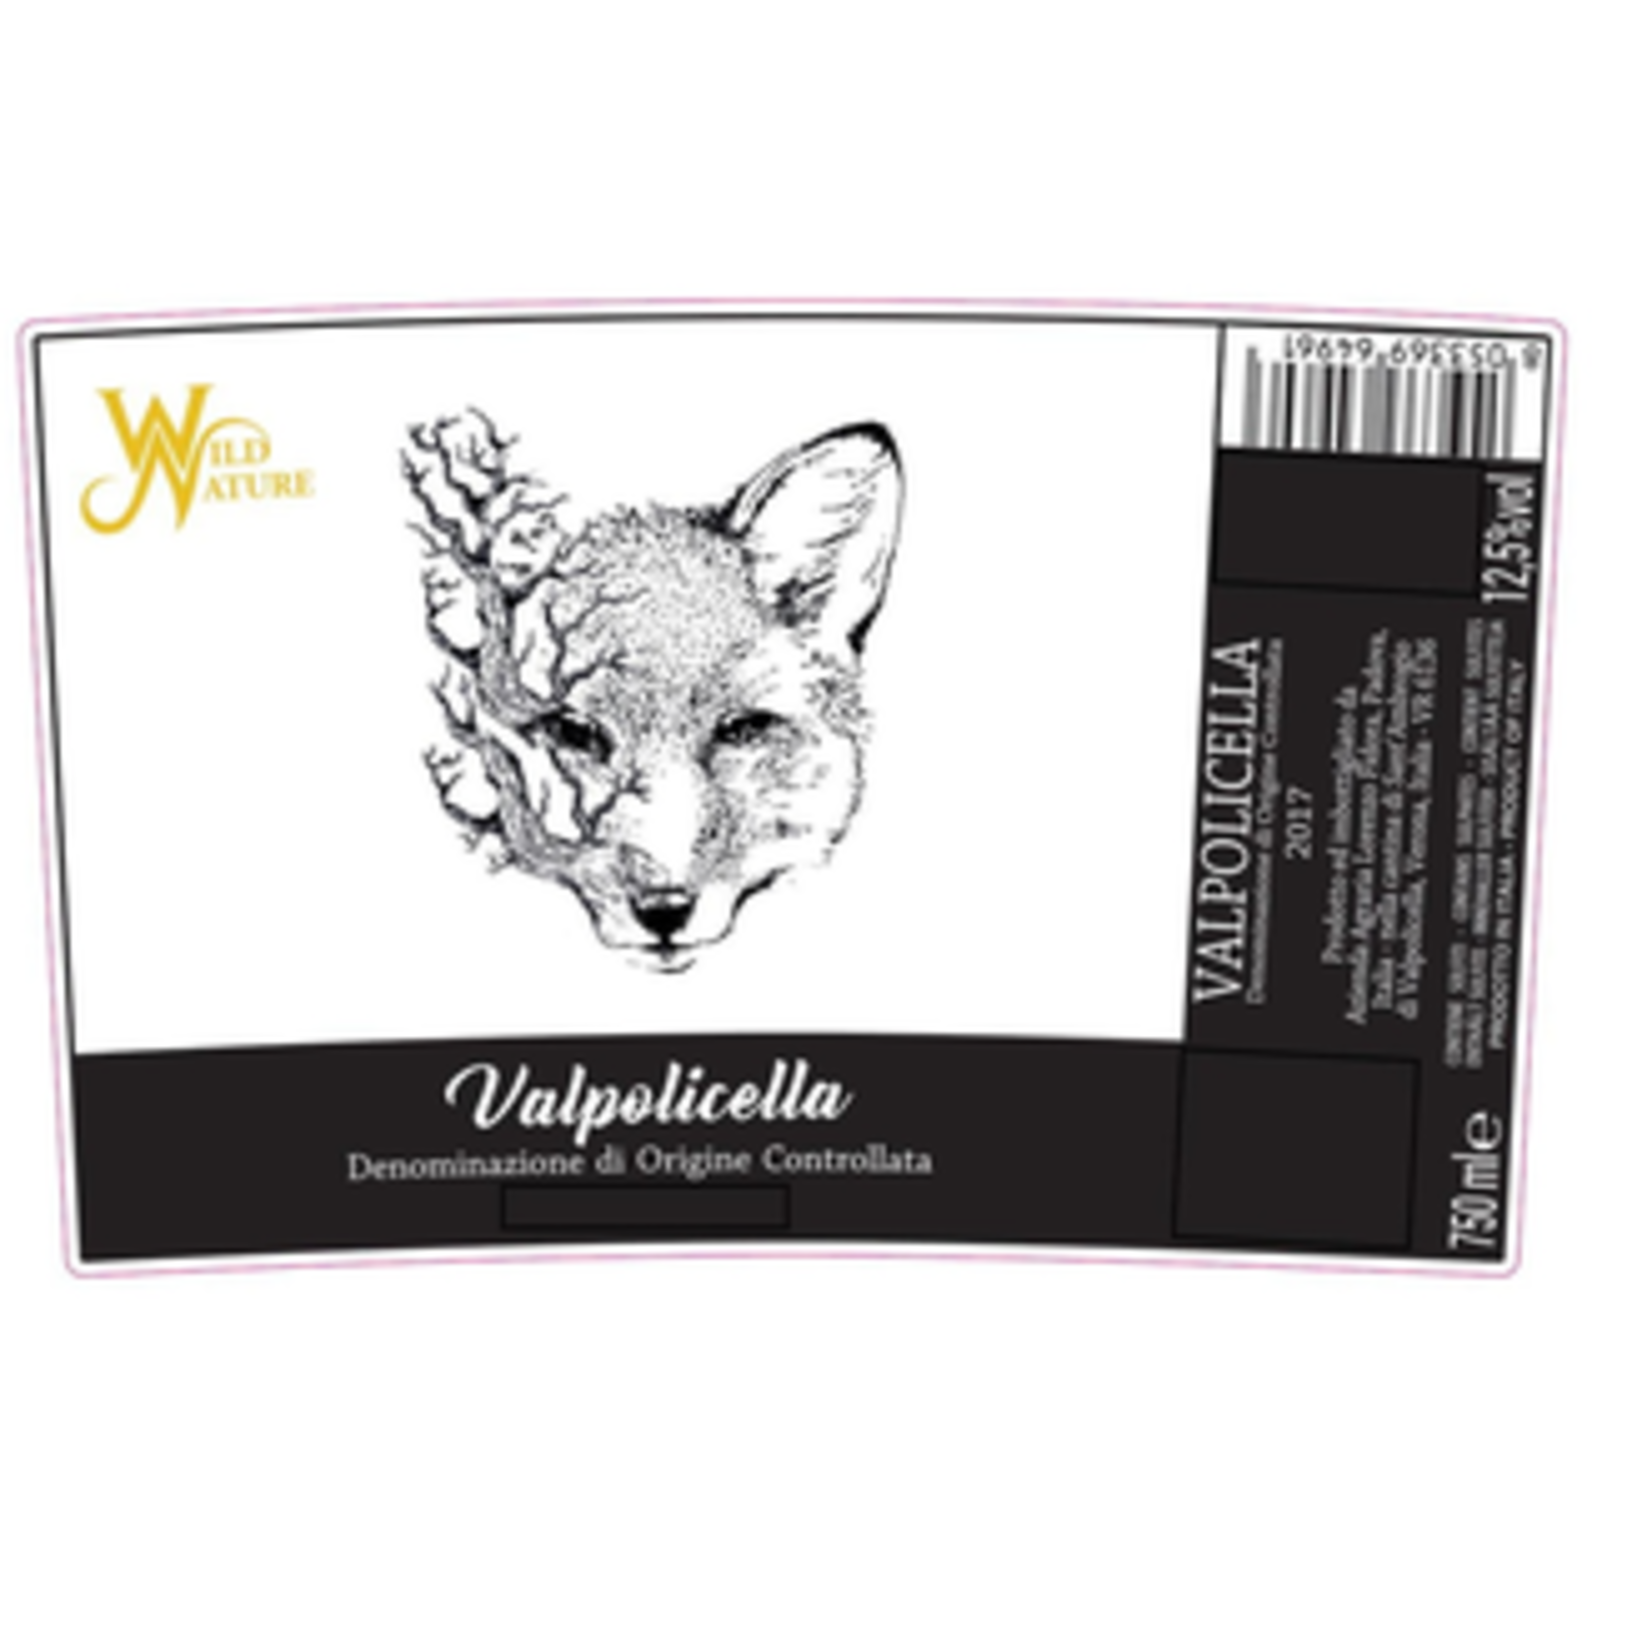 Wine Wild Nature Wines Valpolicella 2020